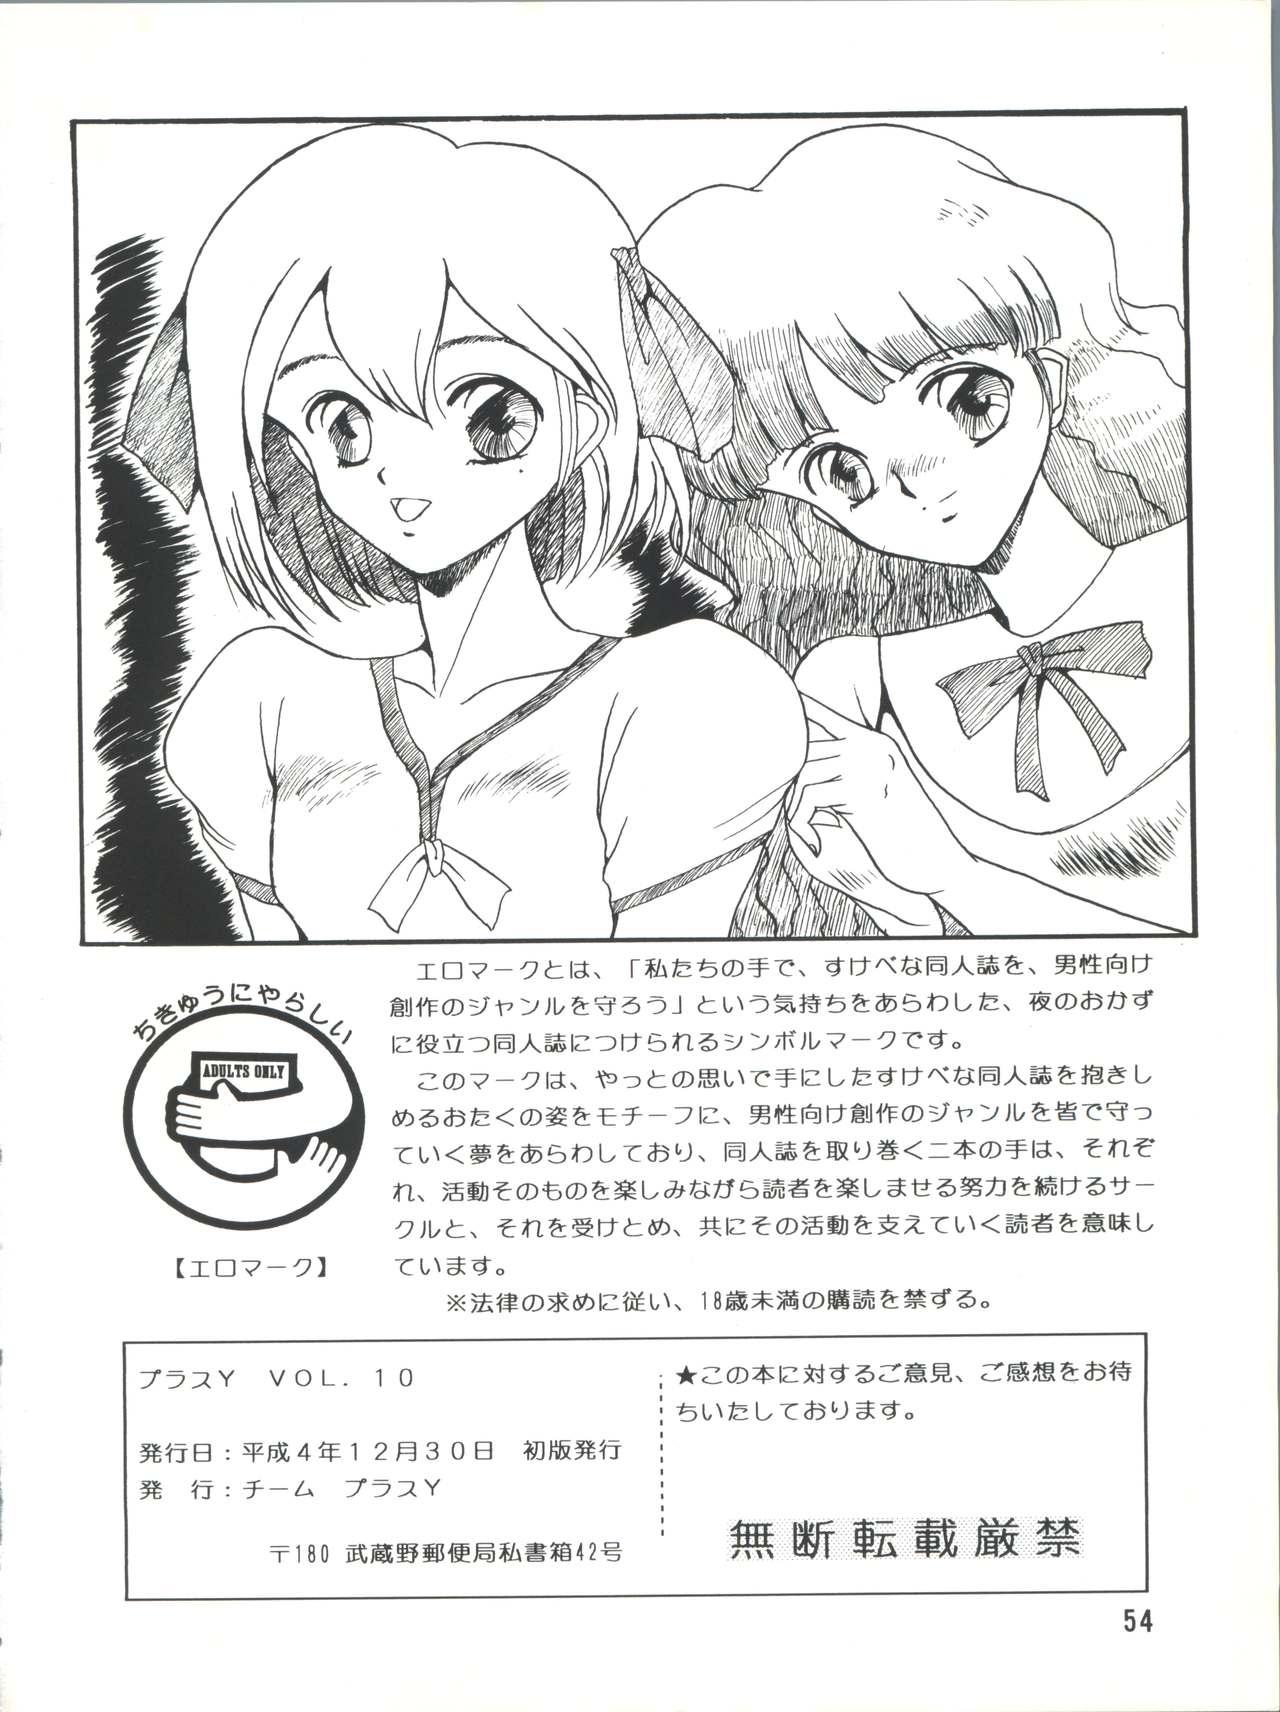 Webcamshow PLUS-Y Vol.10 - Sailor moon Dragon quest v Free Blow Job - Page 54